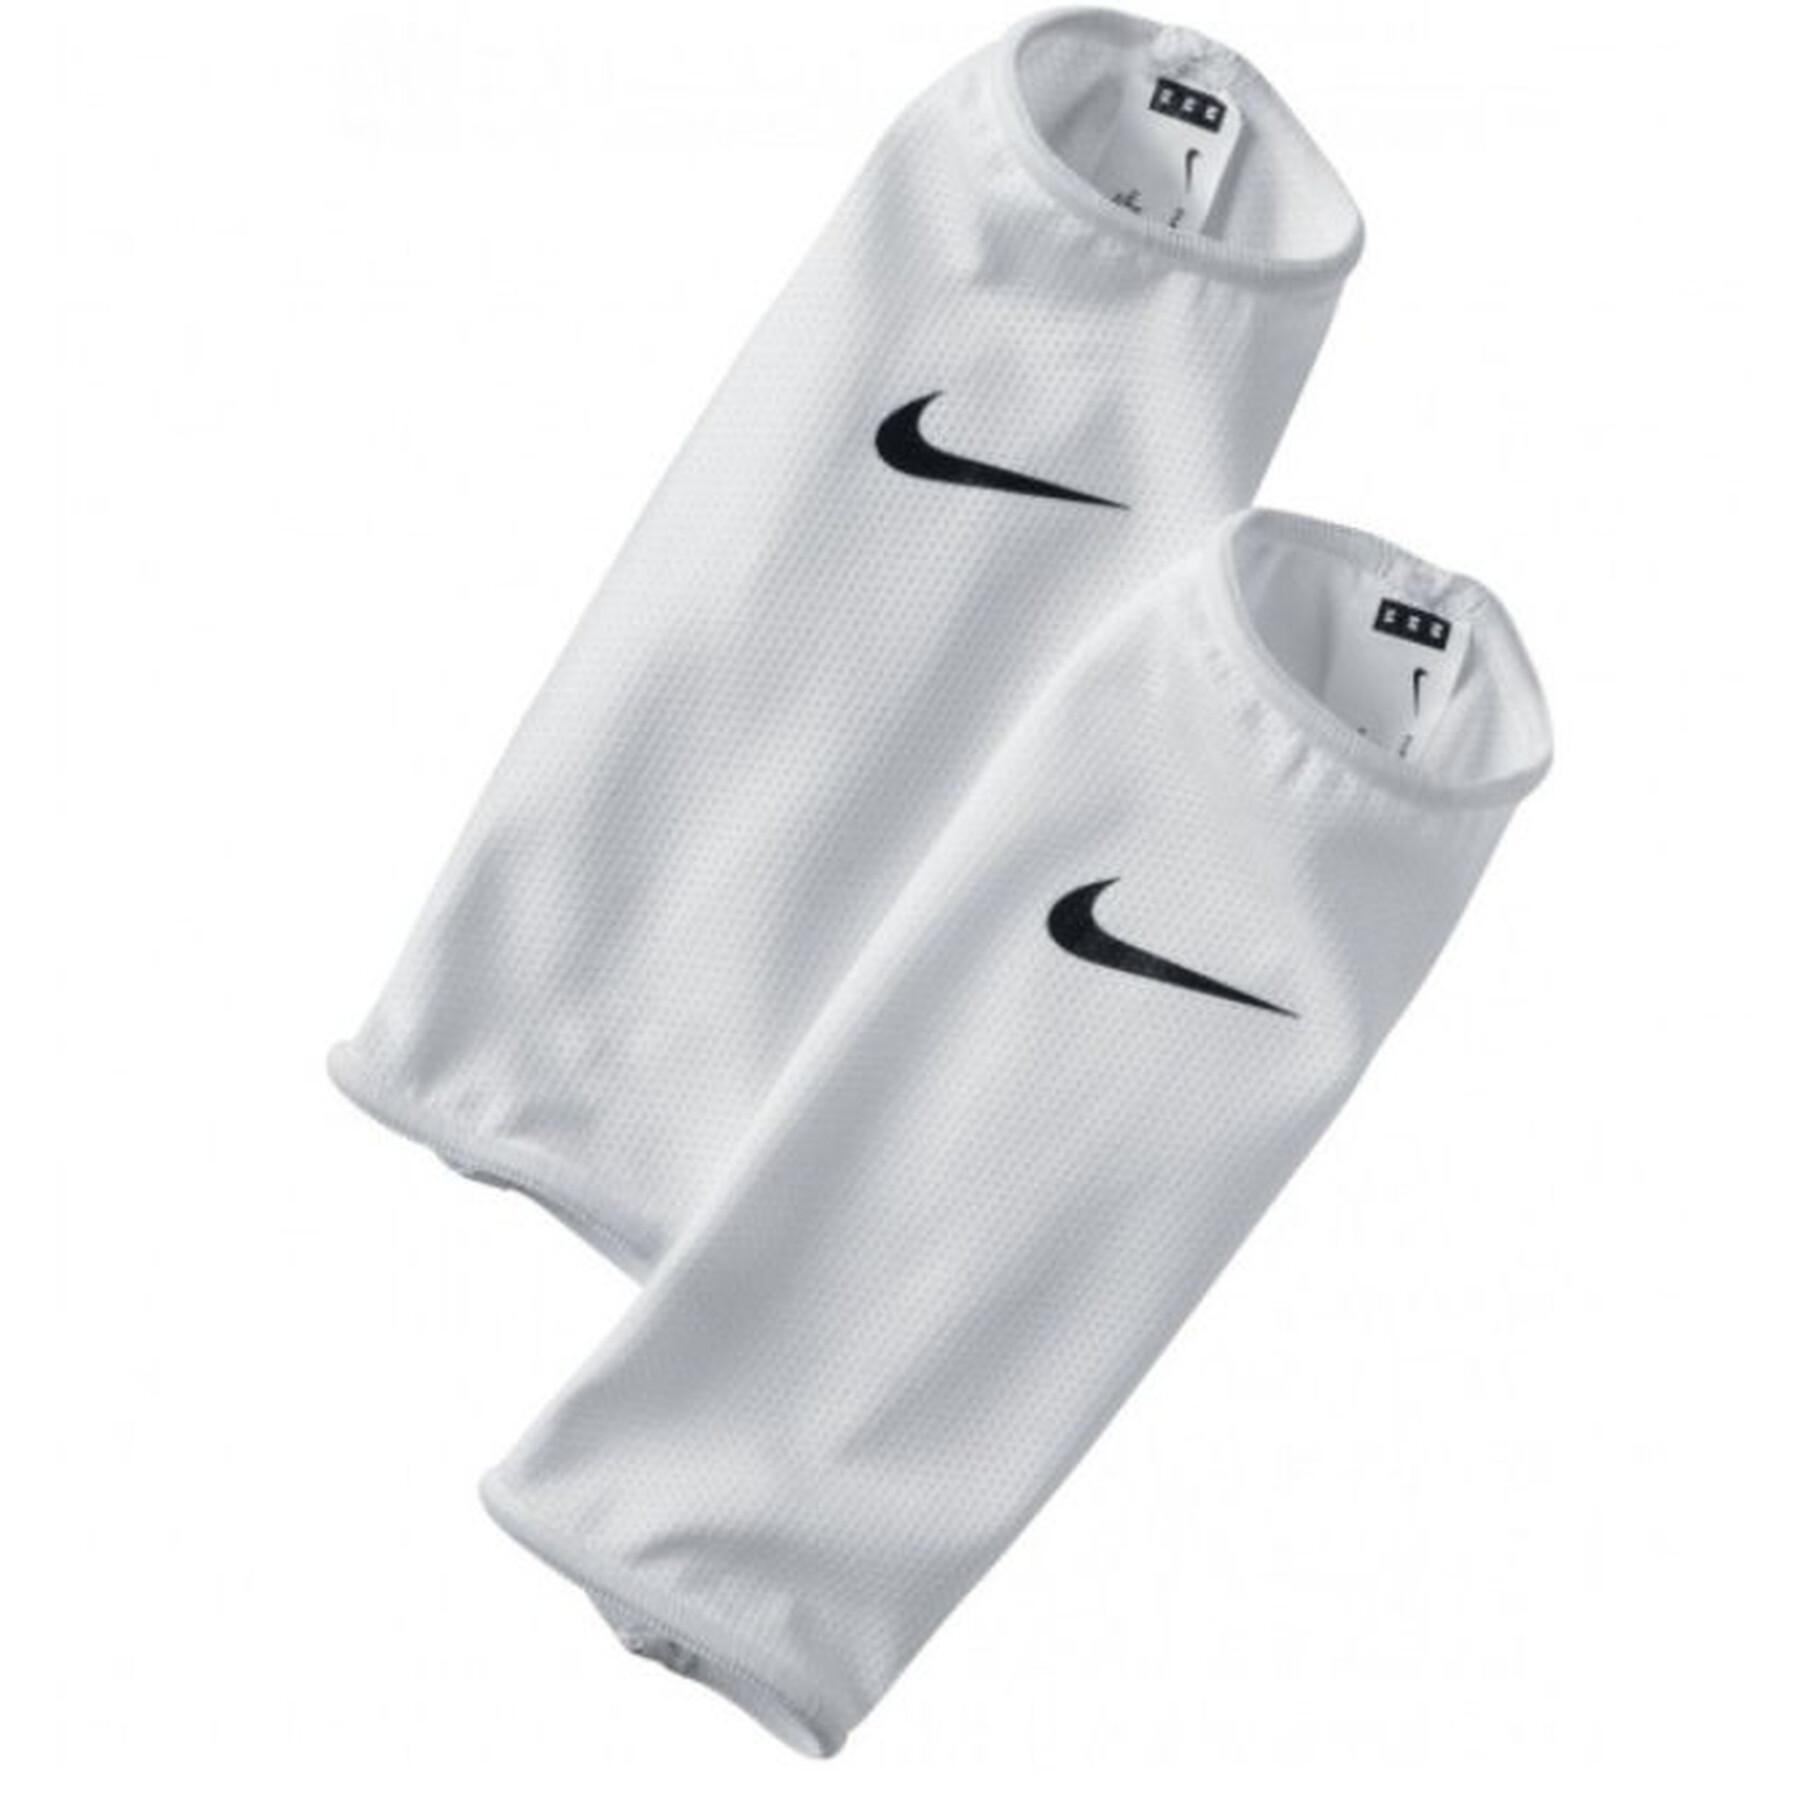 Manga de perna de futebol Nike Confortables